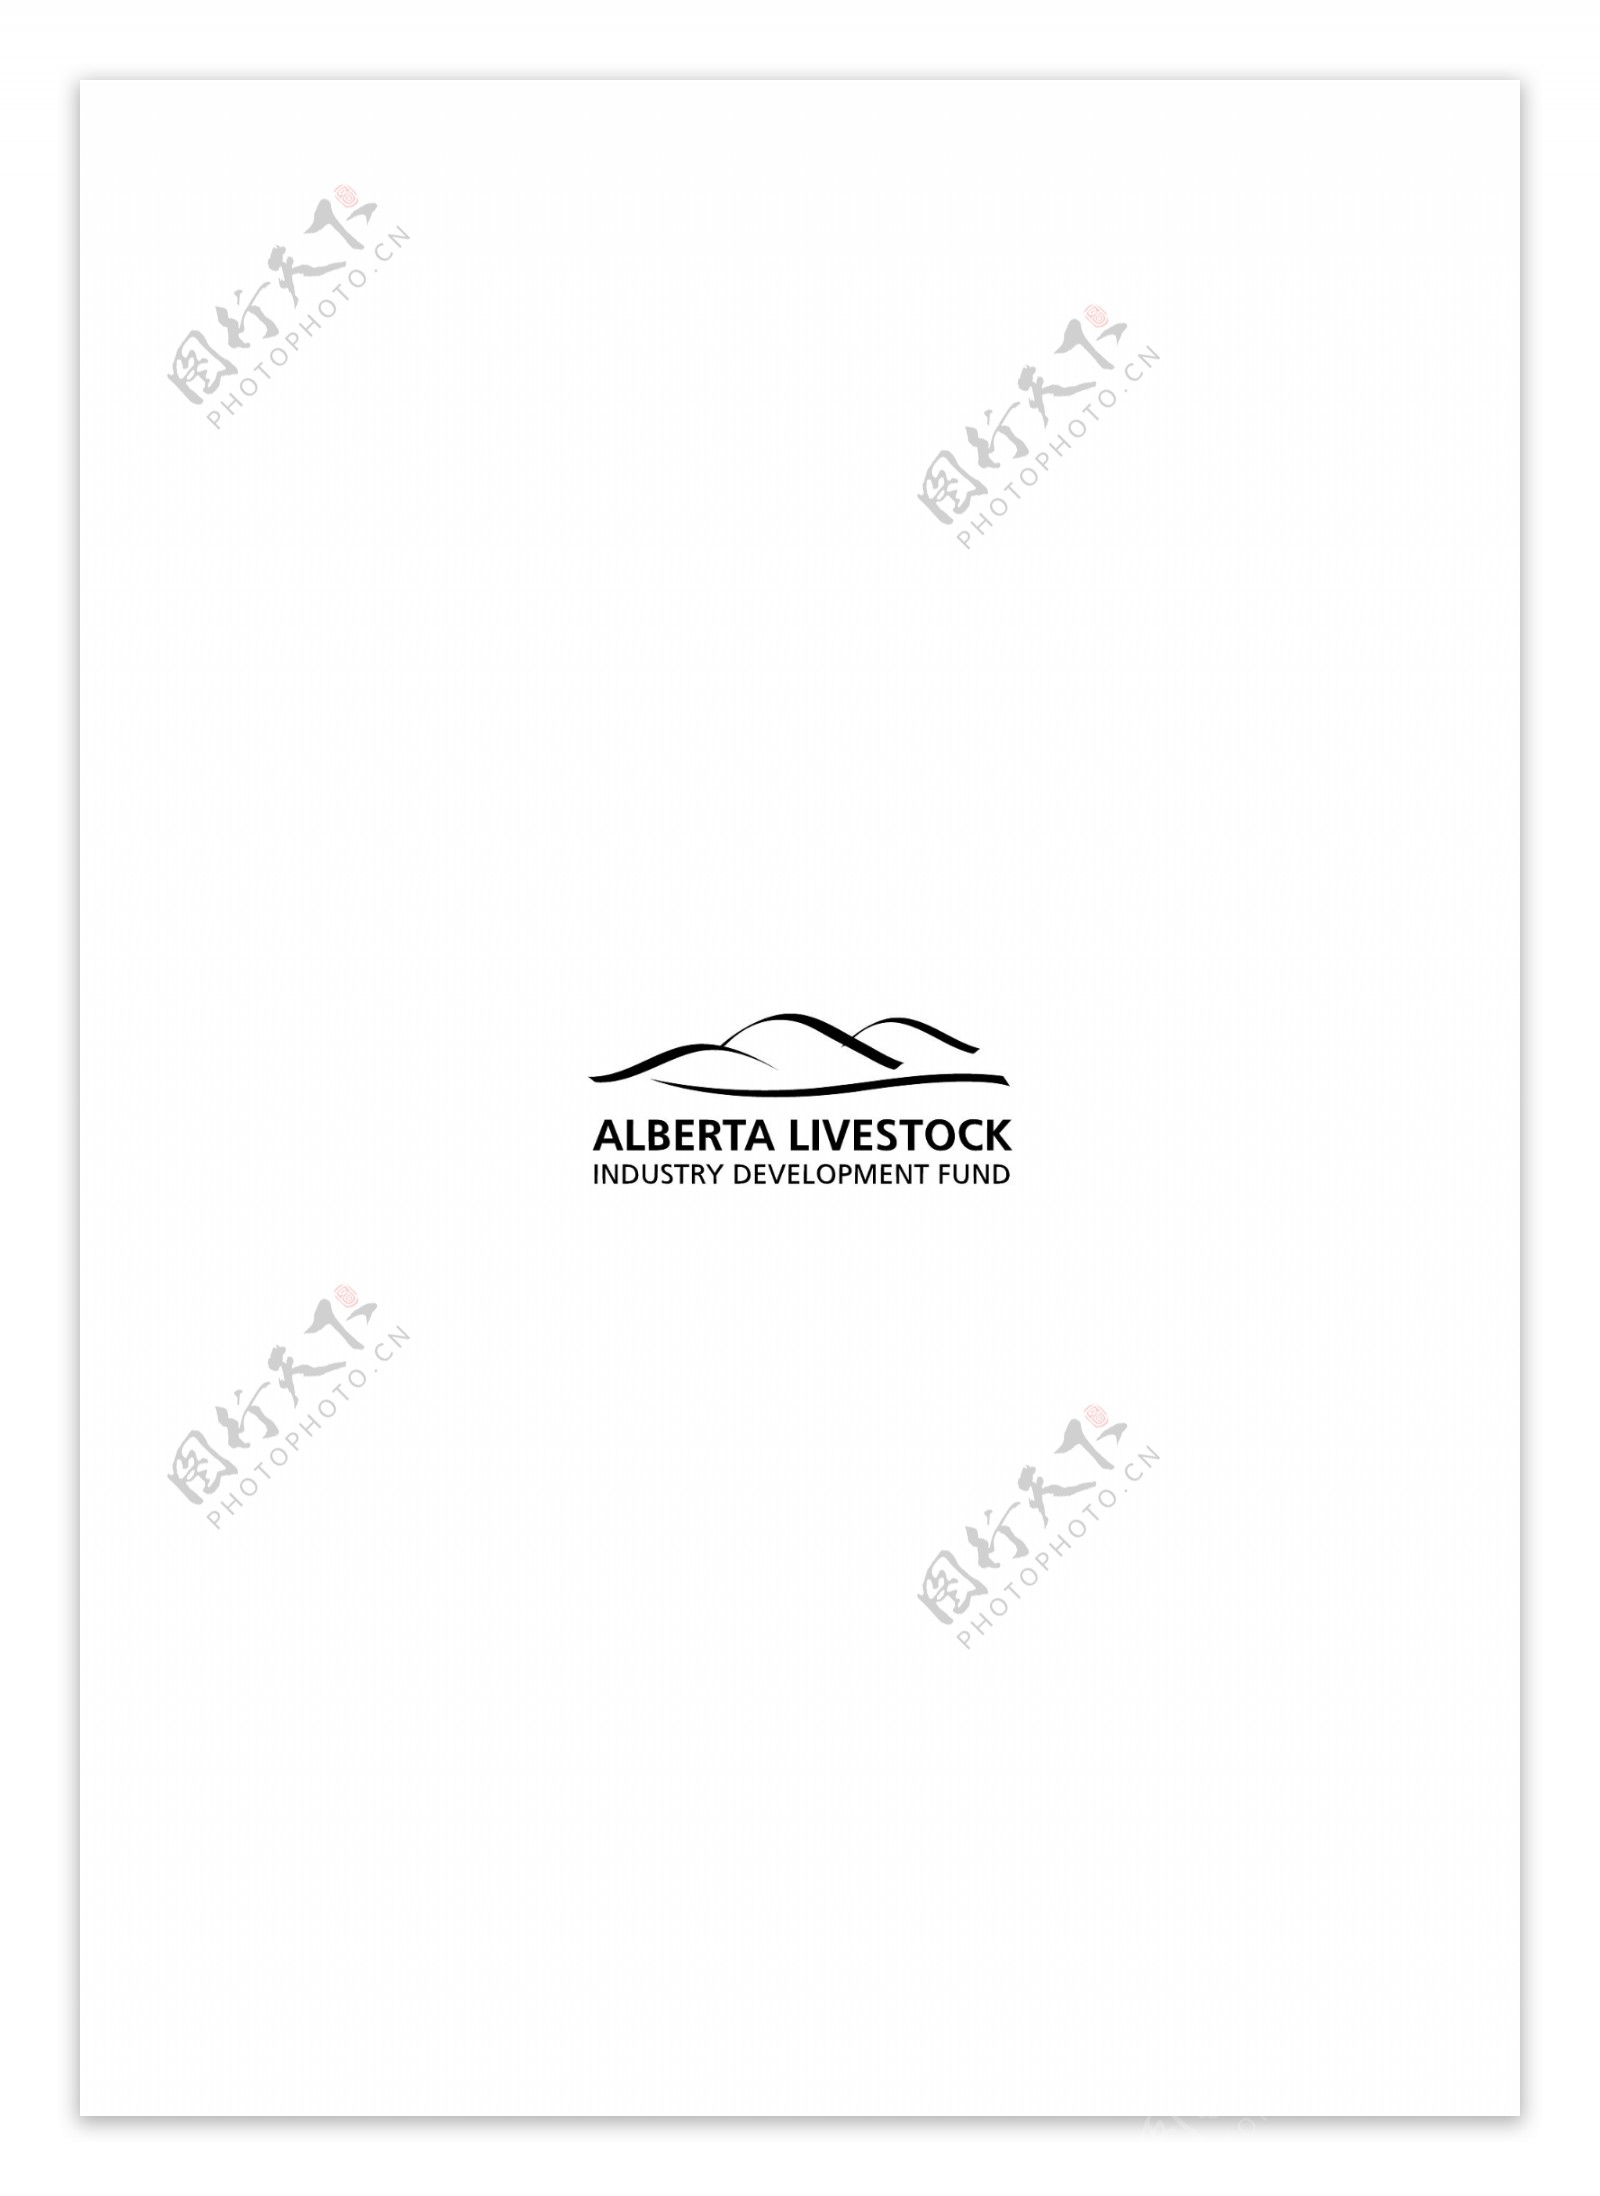 AlbertaLivestockIndustryDevelopmentFundlogo设计欣赏AlbertaLivestockIndustryDevelopmentFund工业标志